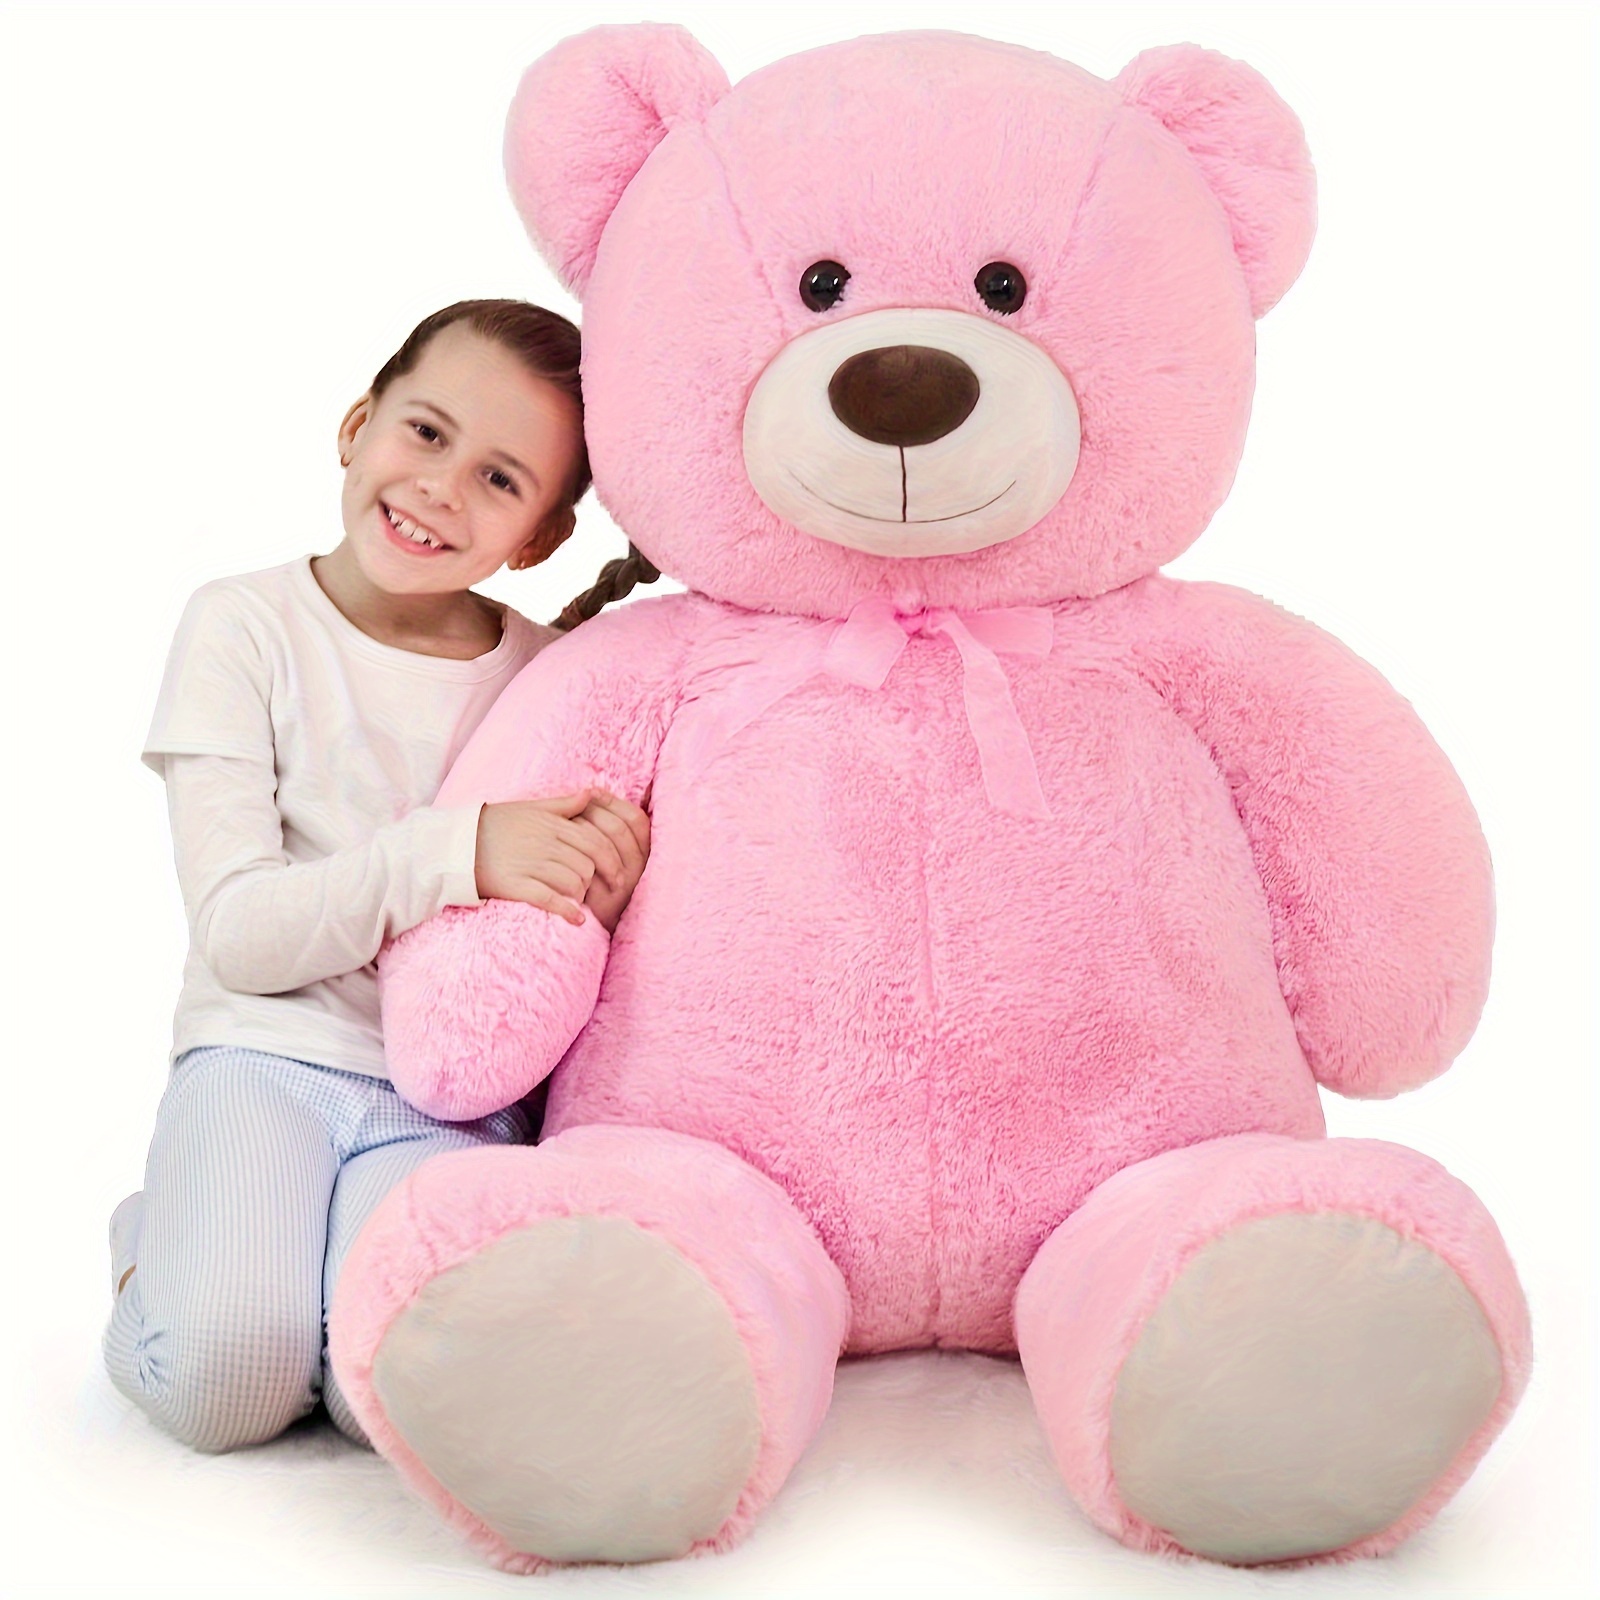 

Giant Teddy Bear Stuffed Animal 4 Feet, Large For Baby Shower, Big For Girlfriend Valentine's Day, Soft Stuffed Bear Plush For Kid Christmas Birthday, Pink